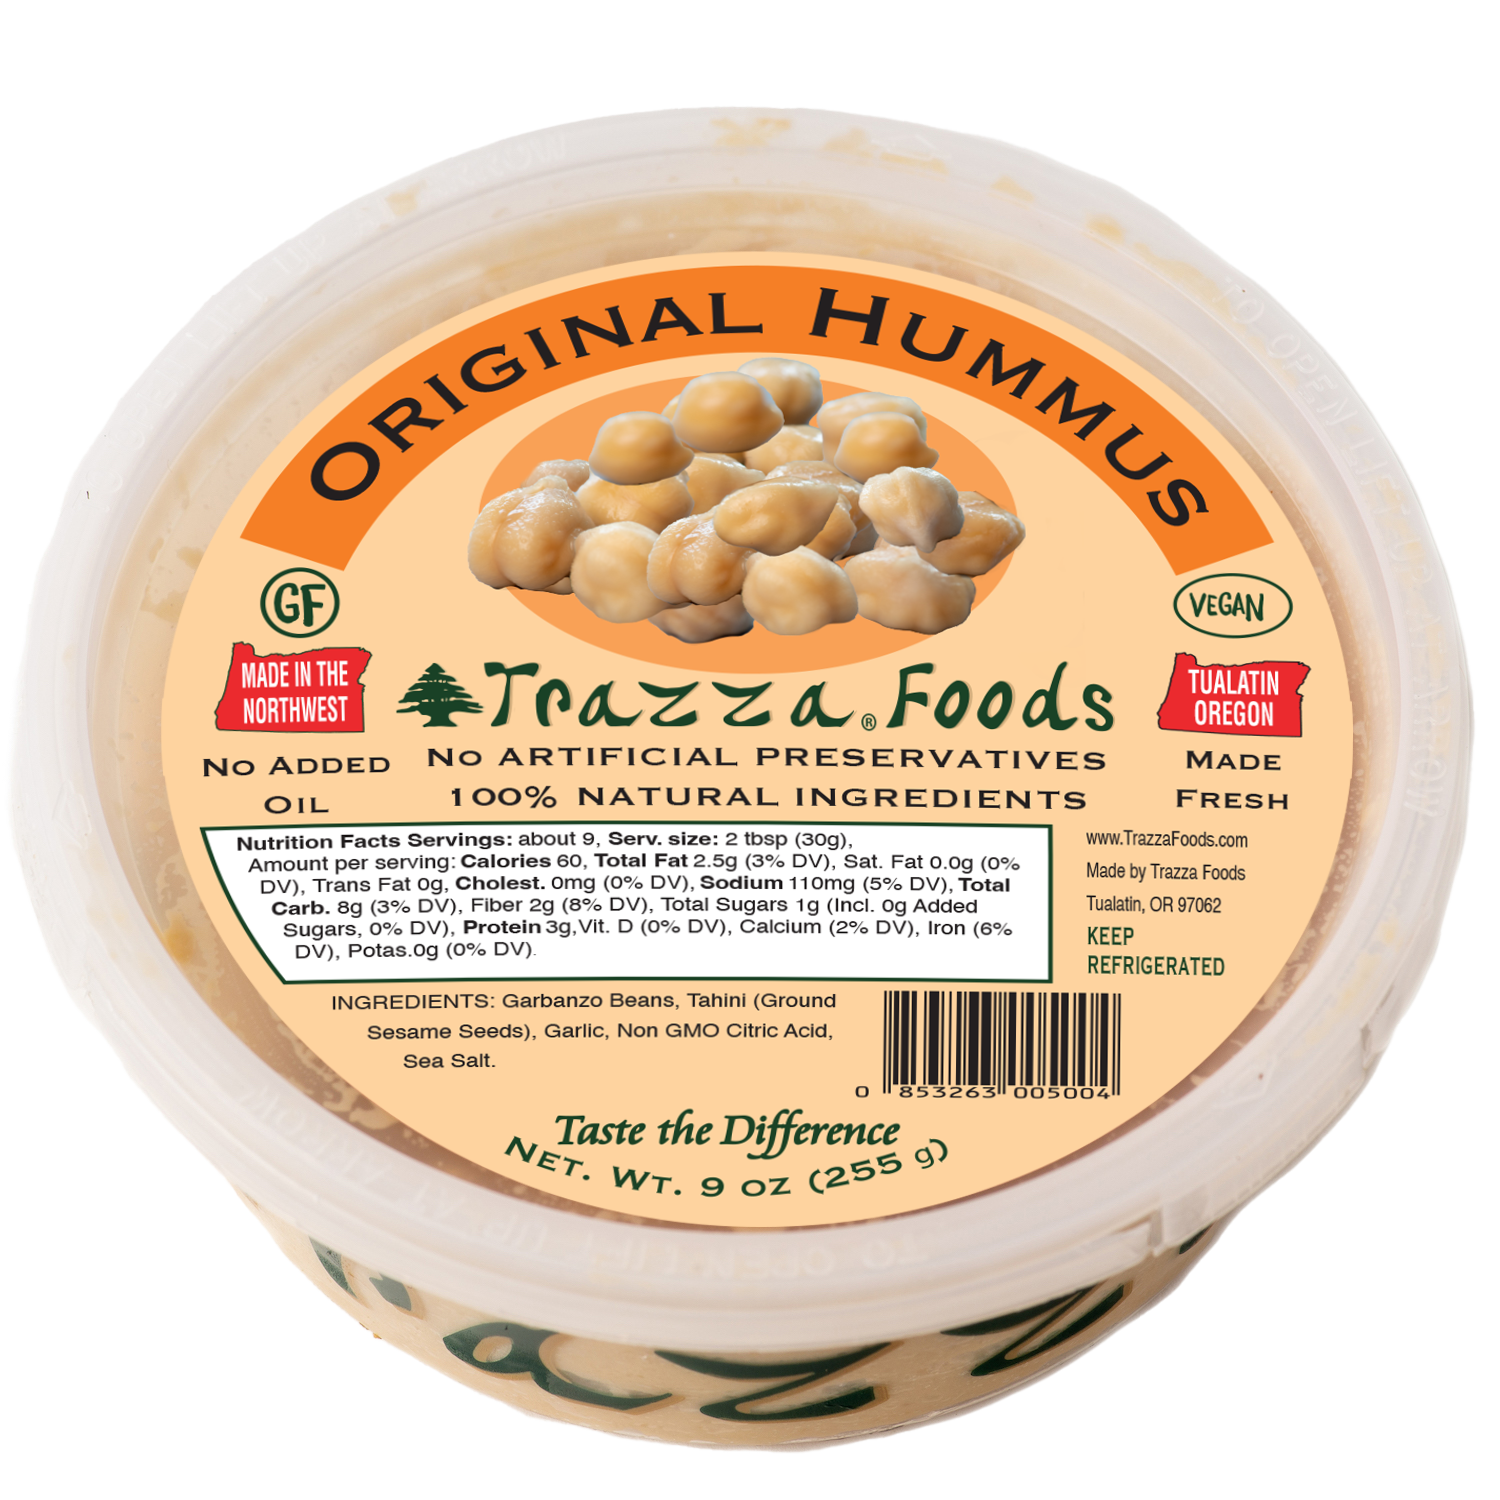 Original Hummus